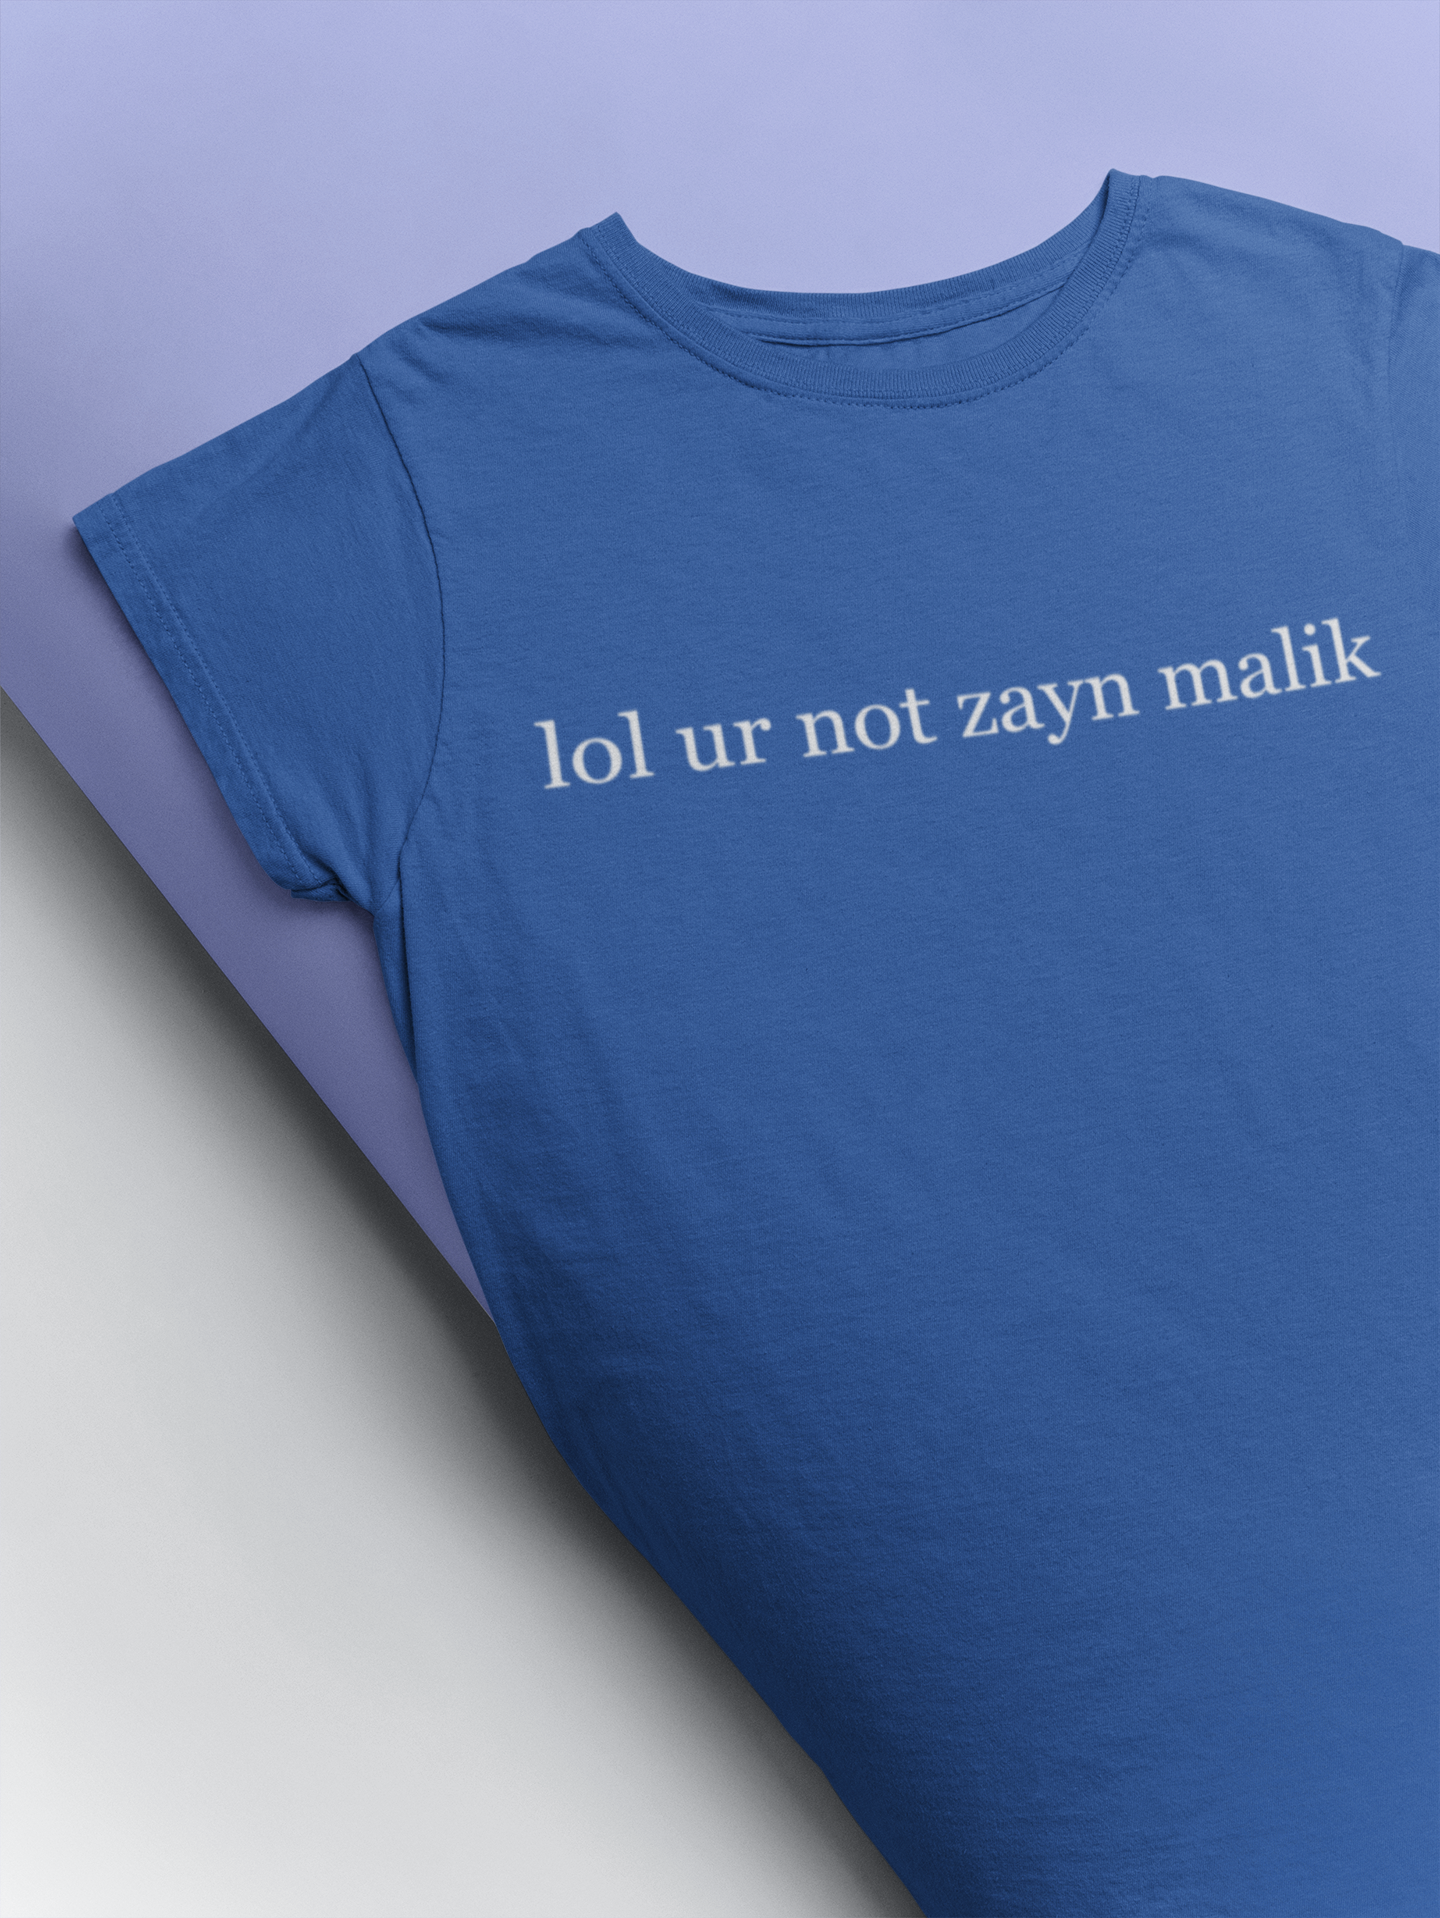 Lol You Are Not Zyan Malik Giga Hadid Celebrity T-shirt- FunkyTeesClub